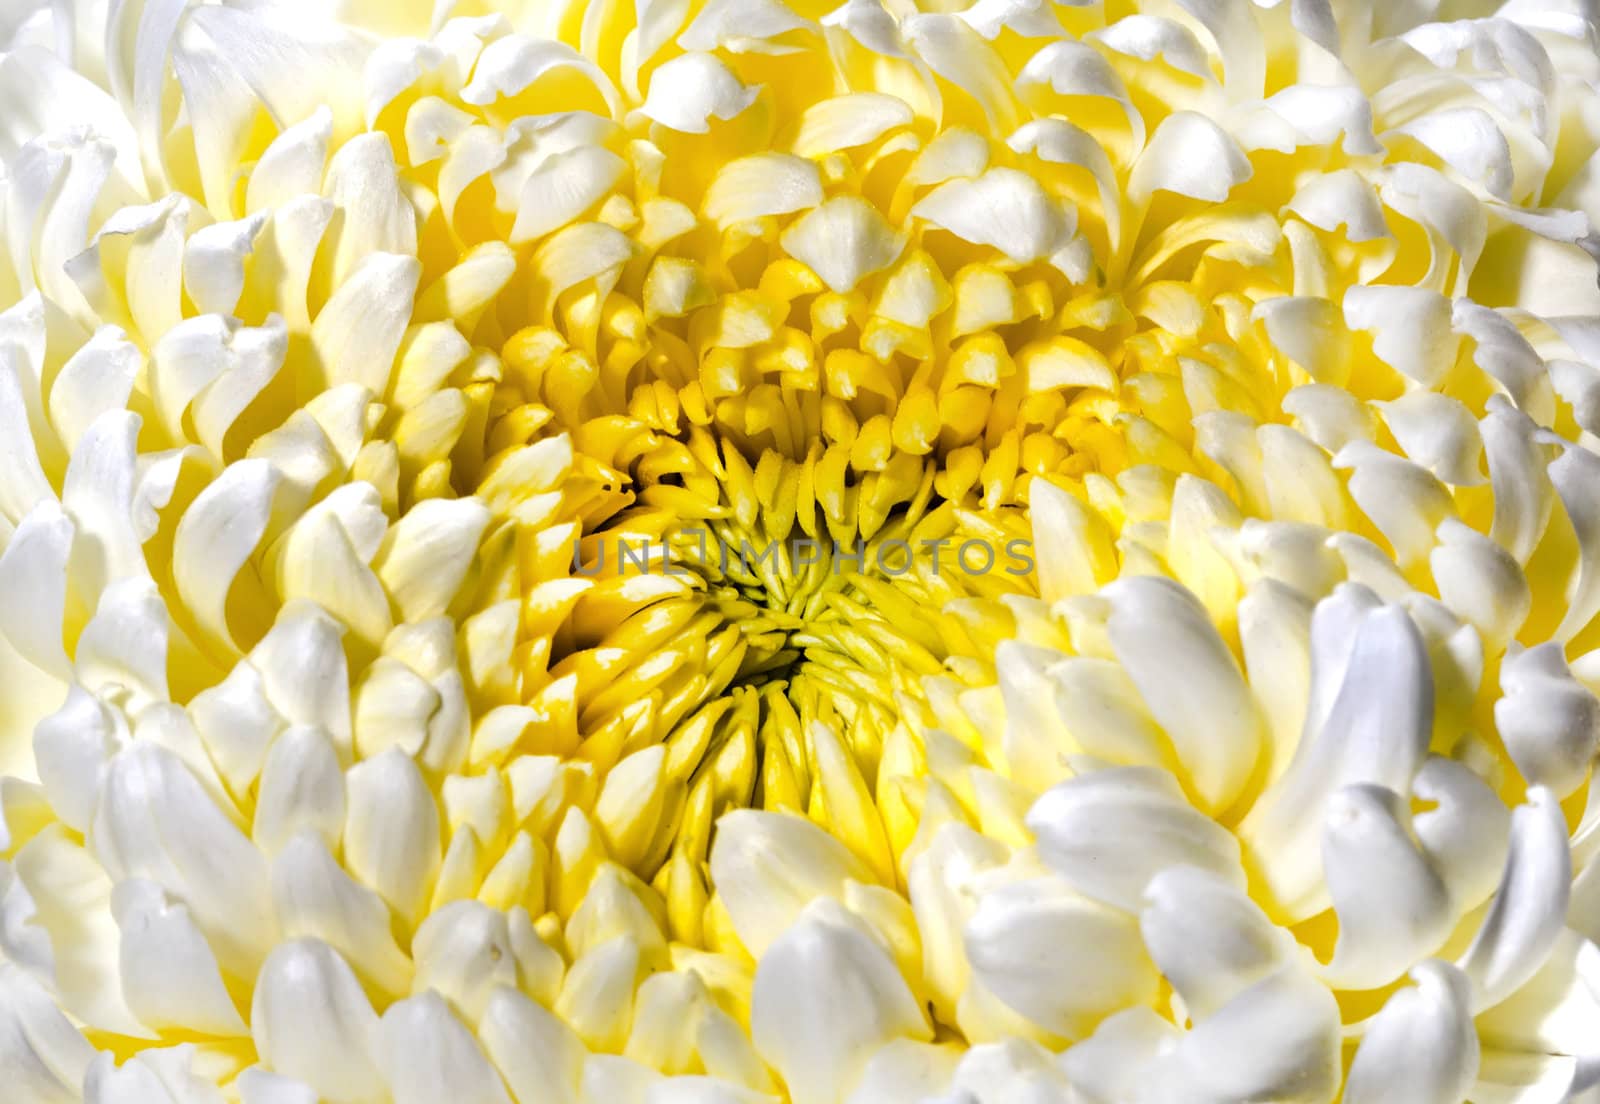 Yellow chrysanthemum flower close view by RawGroup